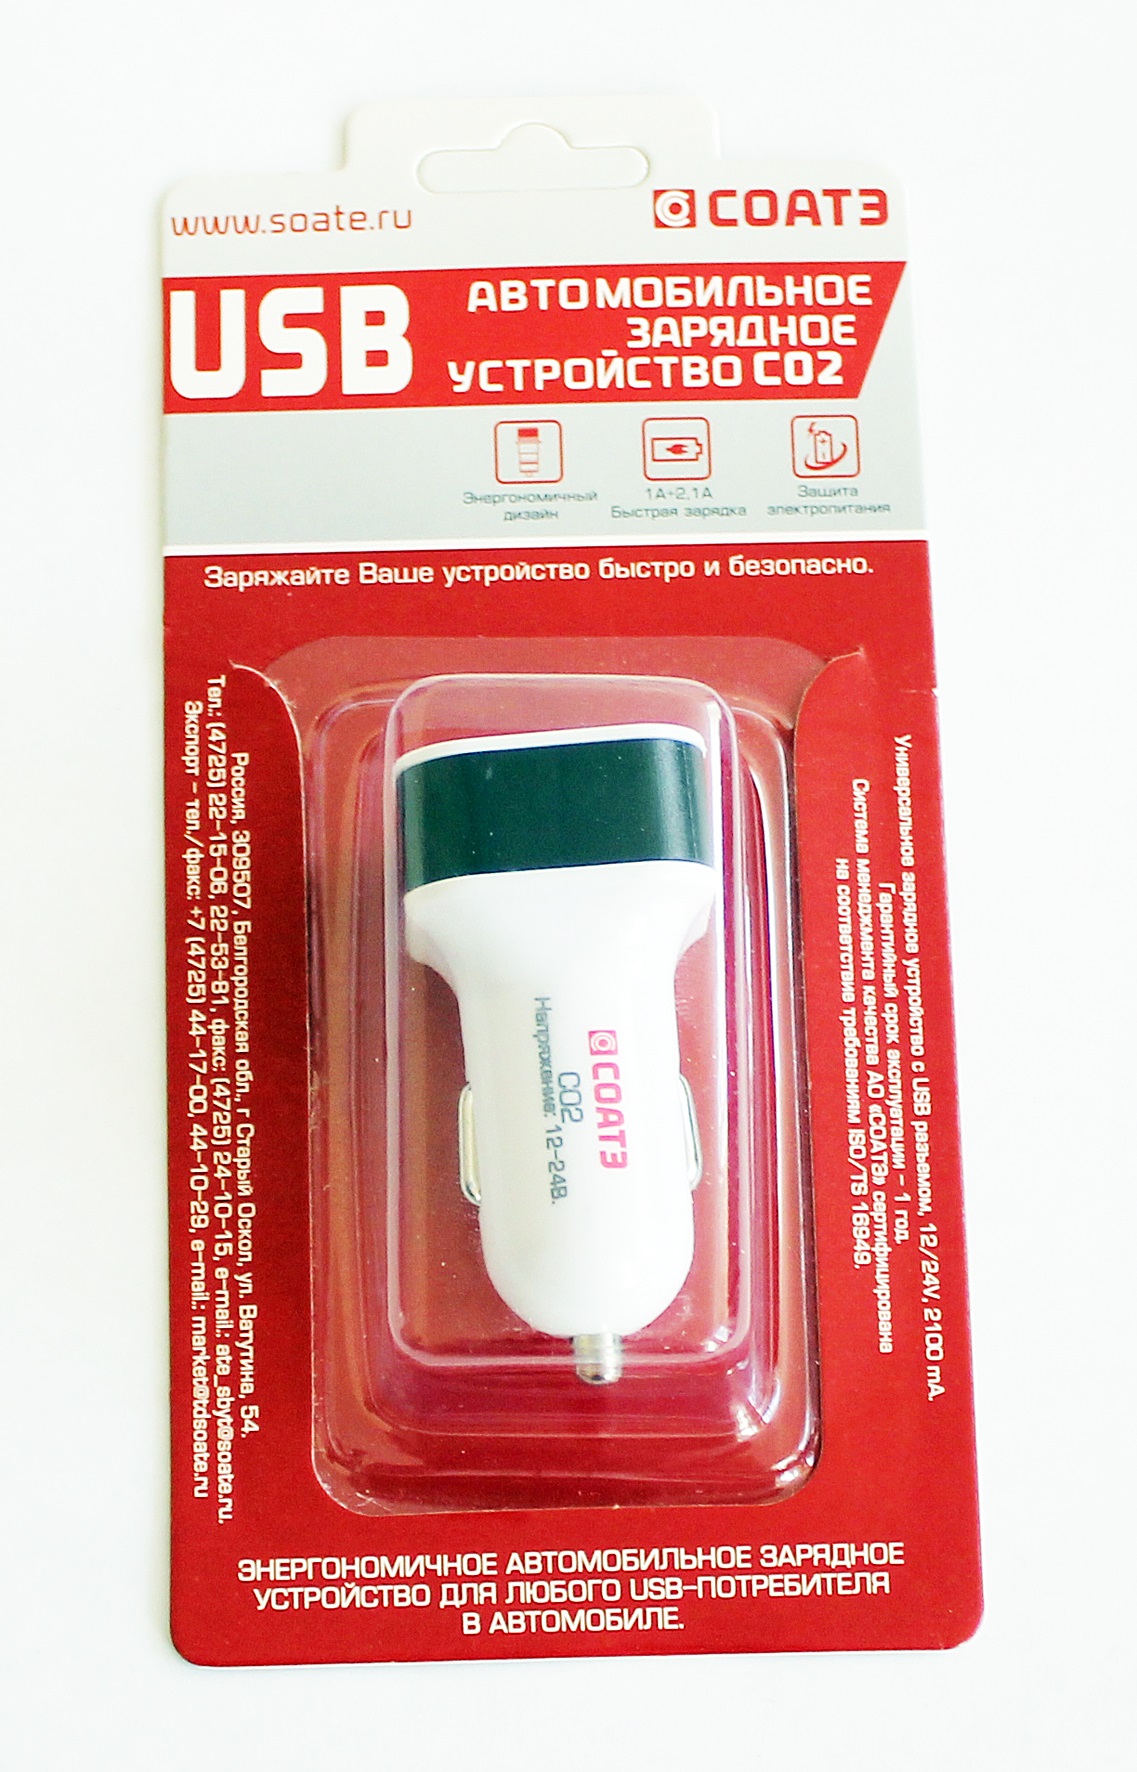 Зарядное устройство USB c двумя выходами 1,0/2.1 А. - Соатэ C02